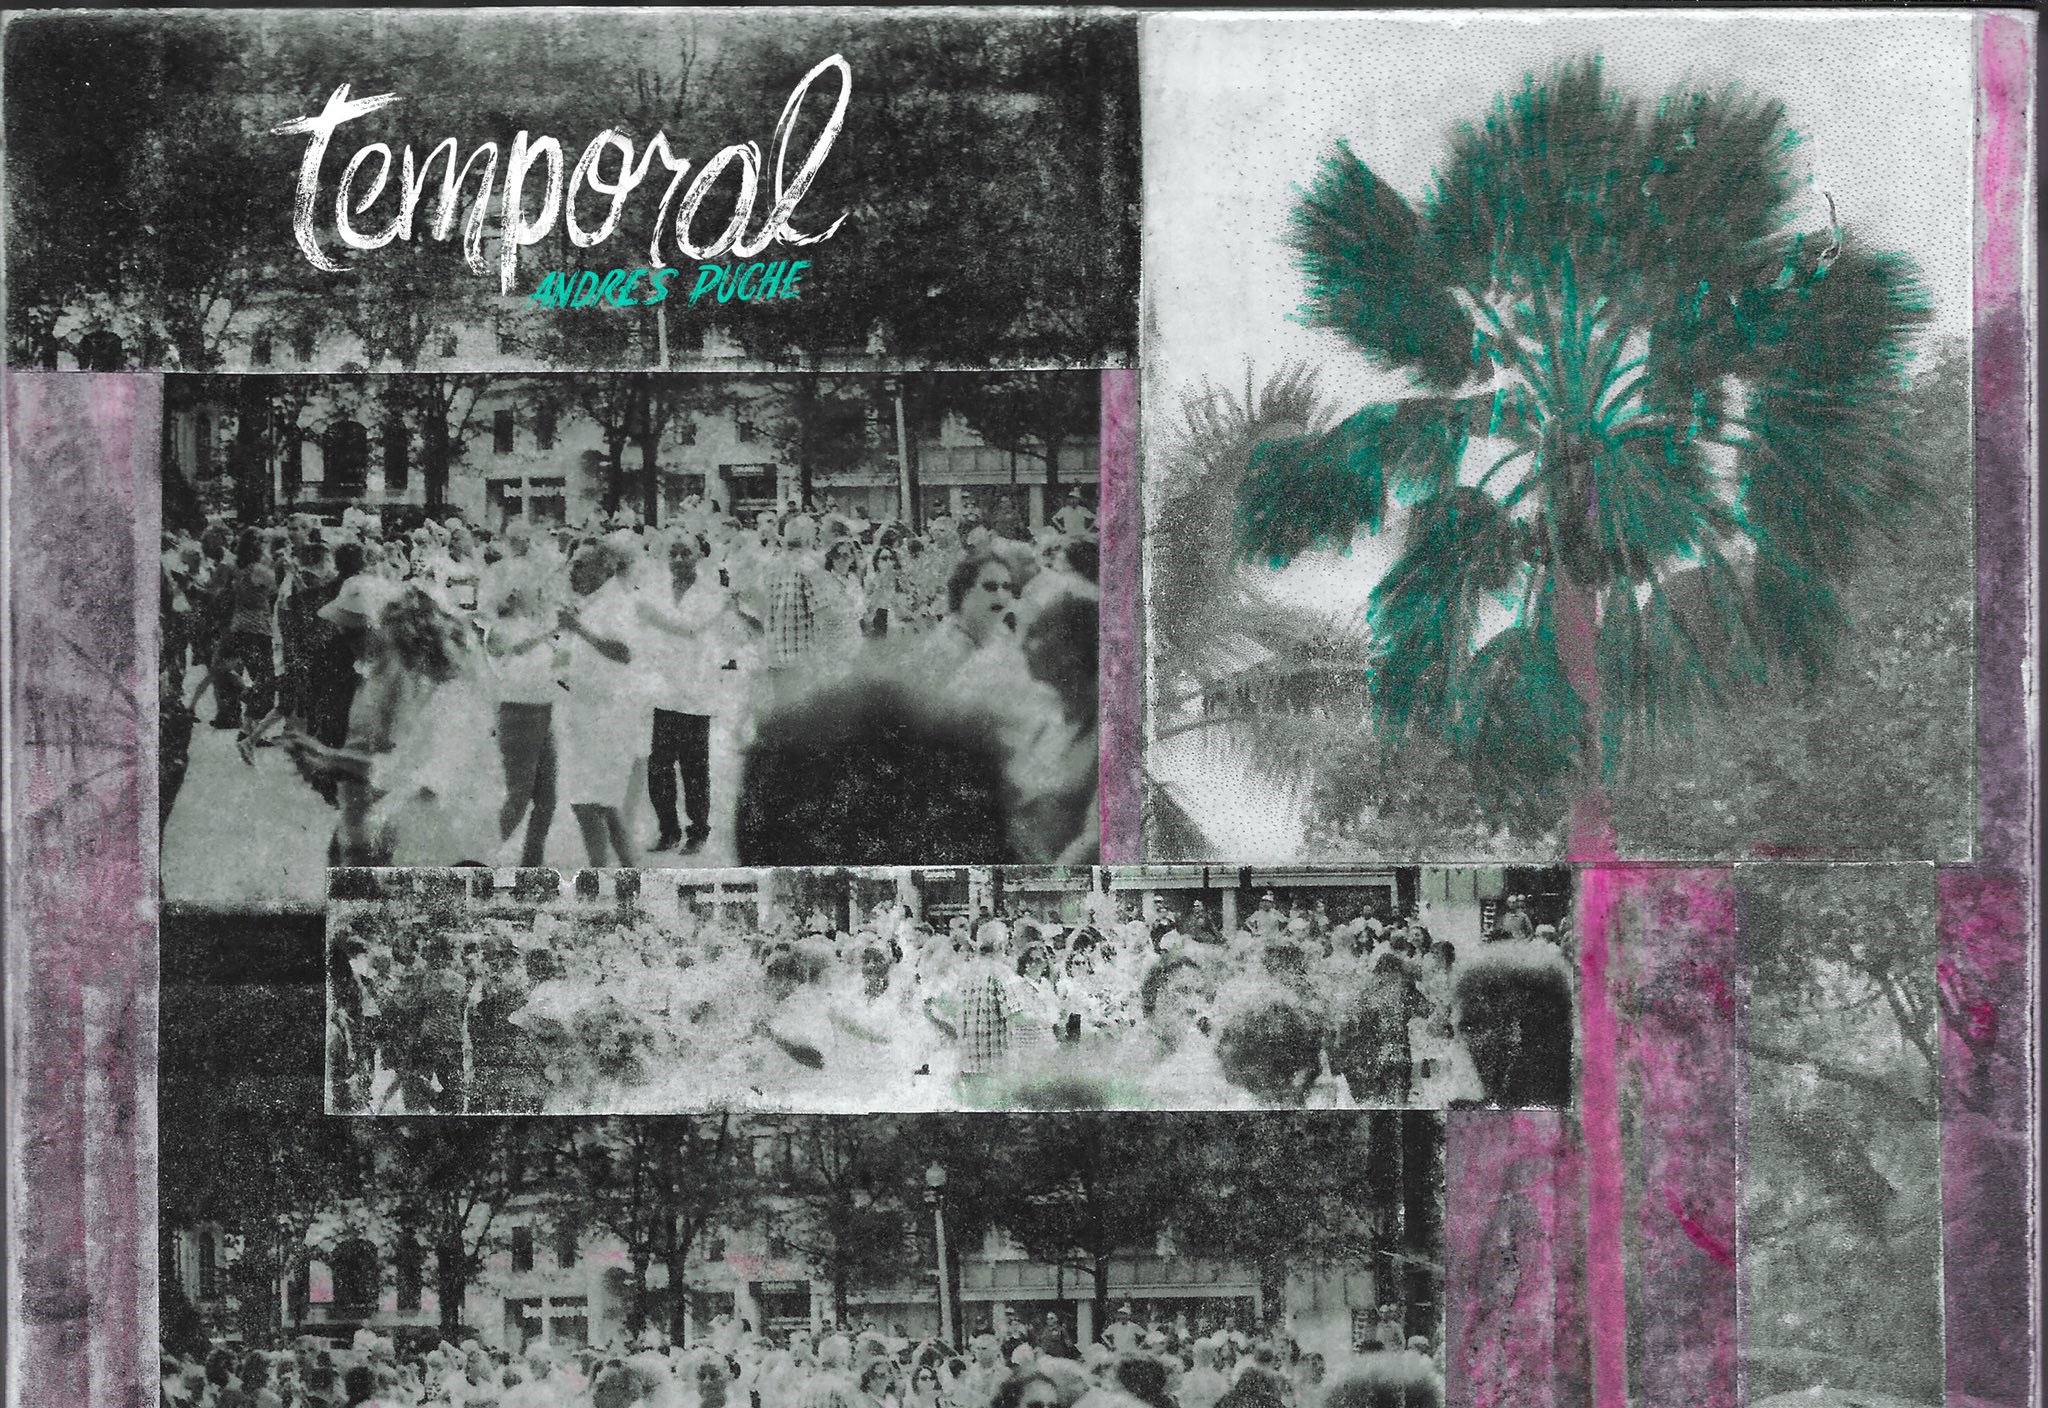 Andres Puche revela su 4to single ‘Temporal’